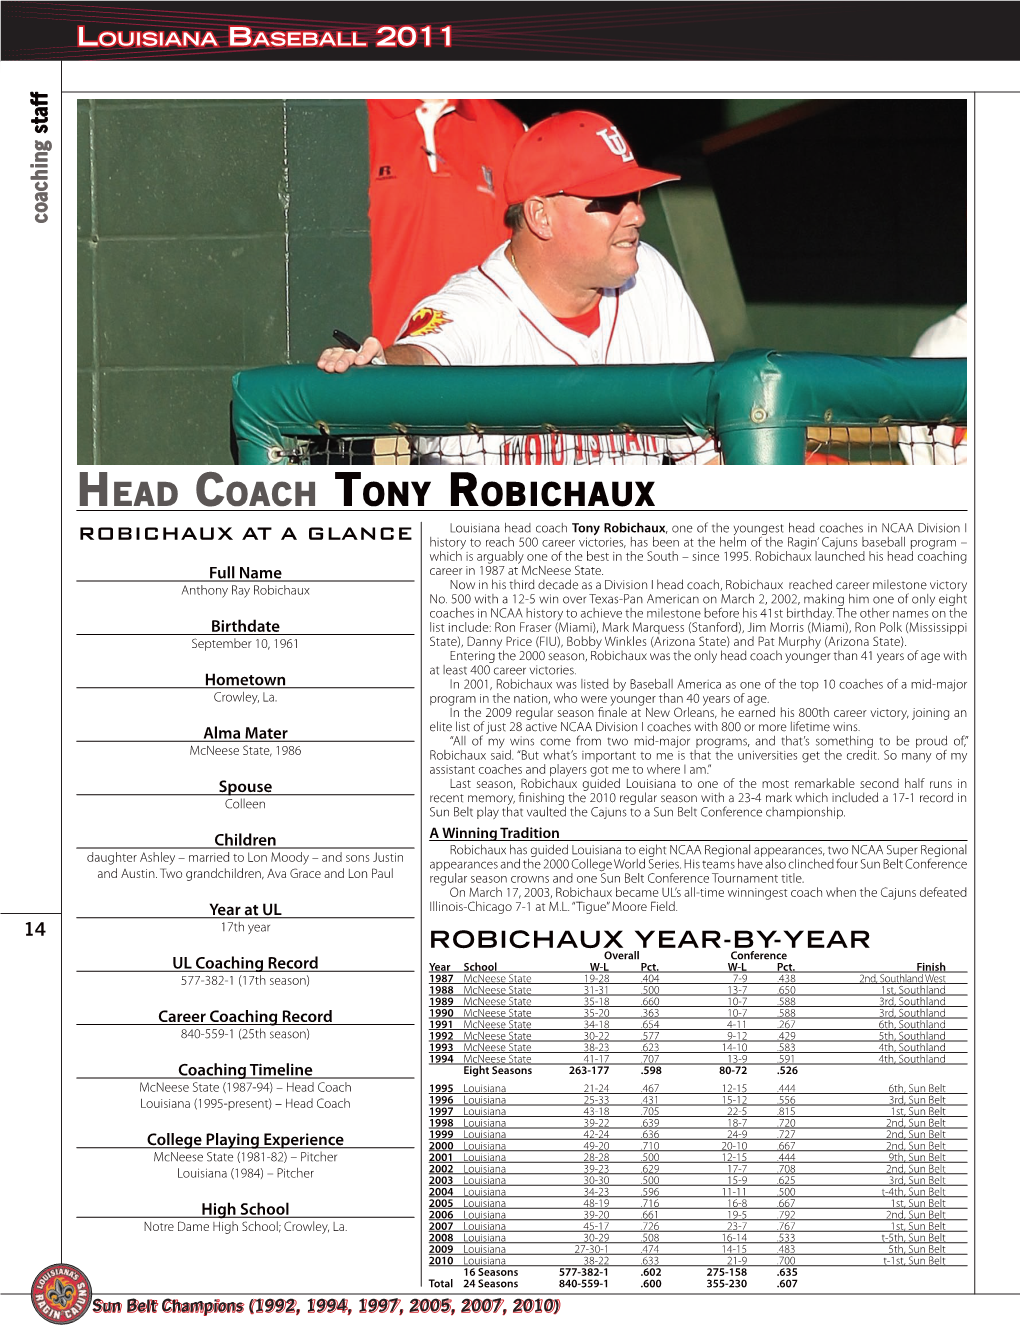 Head Coach Tony Robichaux